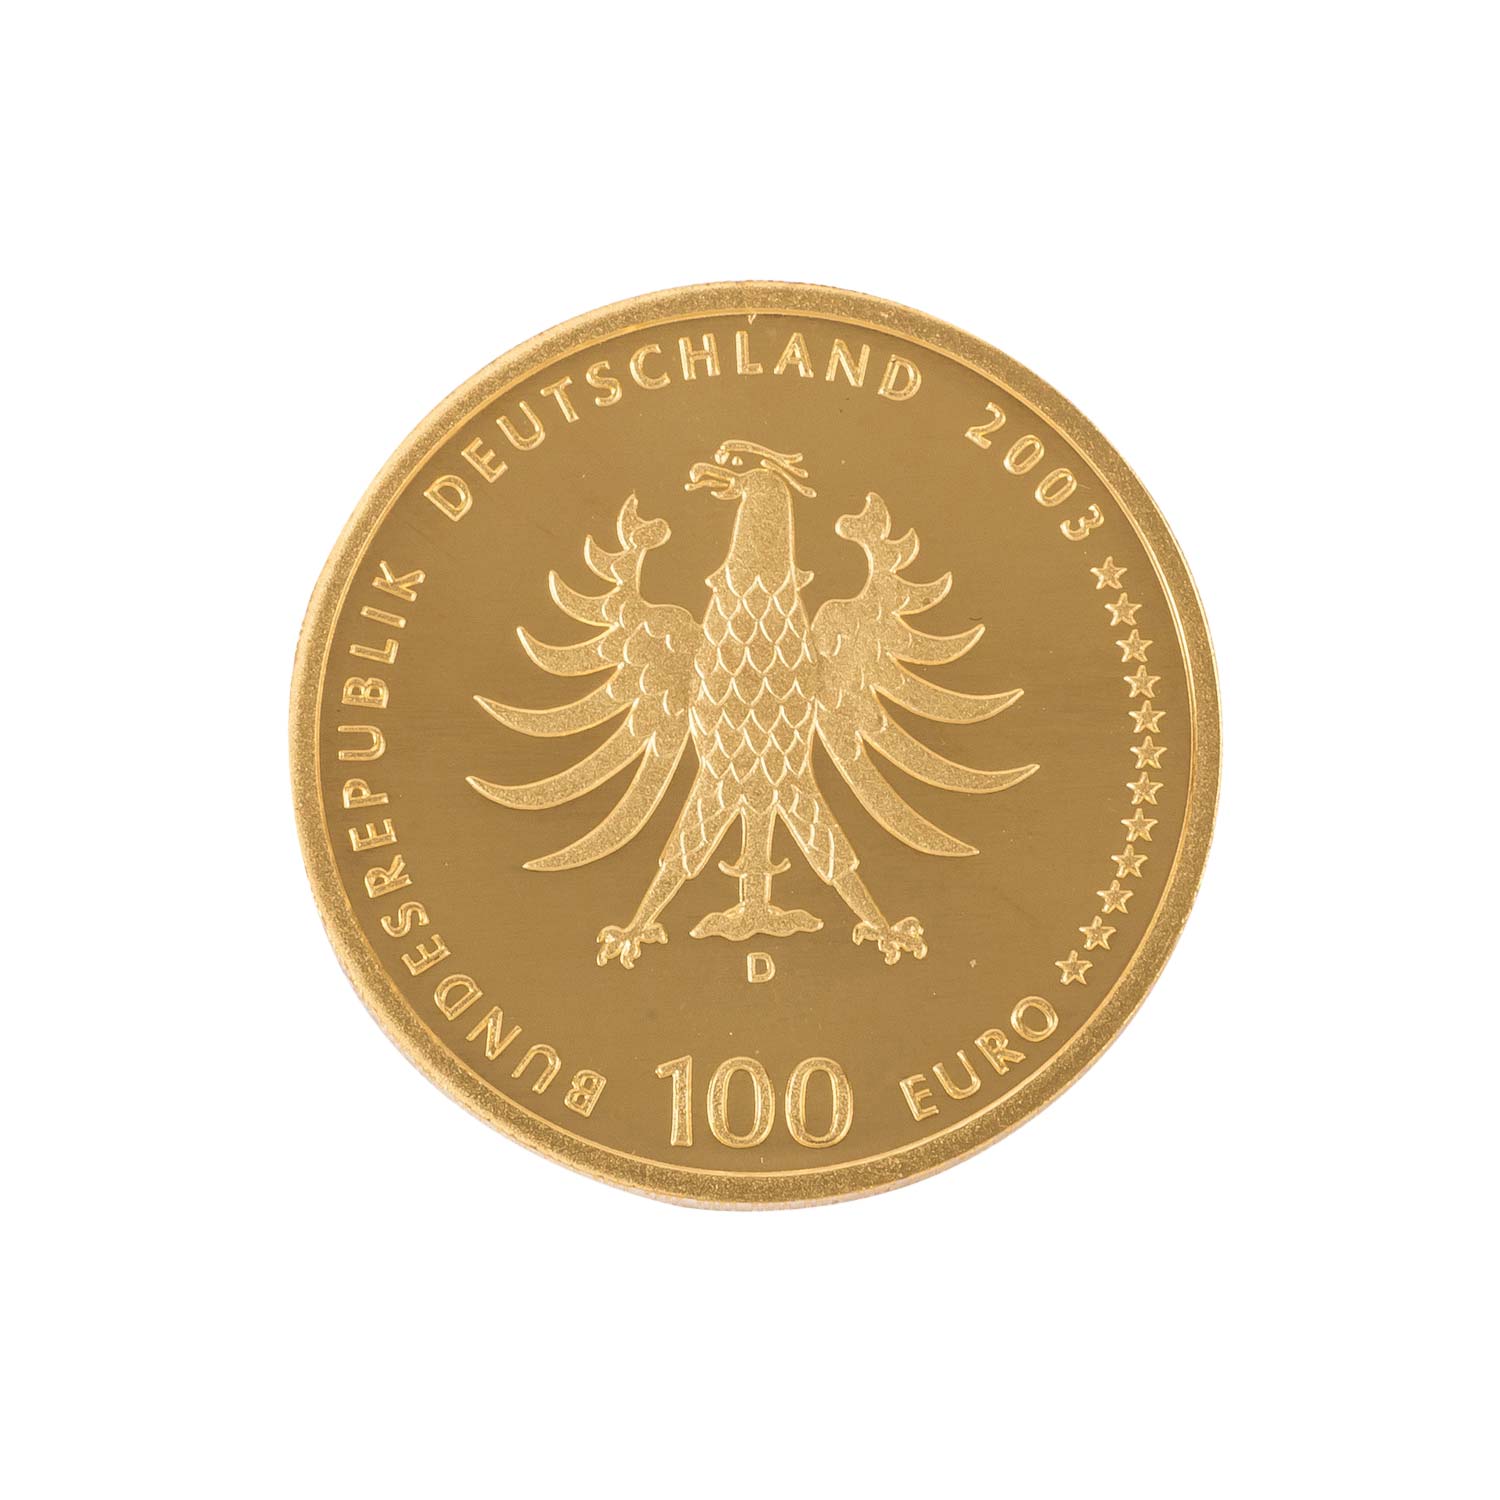 BRD/GOLD - 100 Euro 2003 D - Image 2 of 3